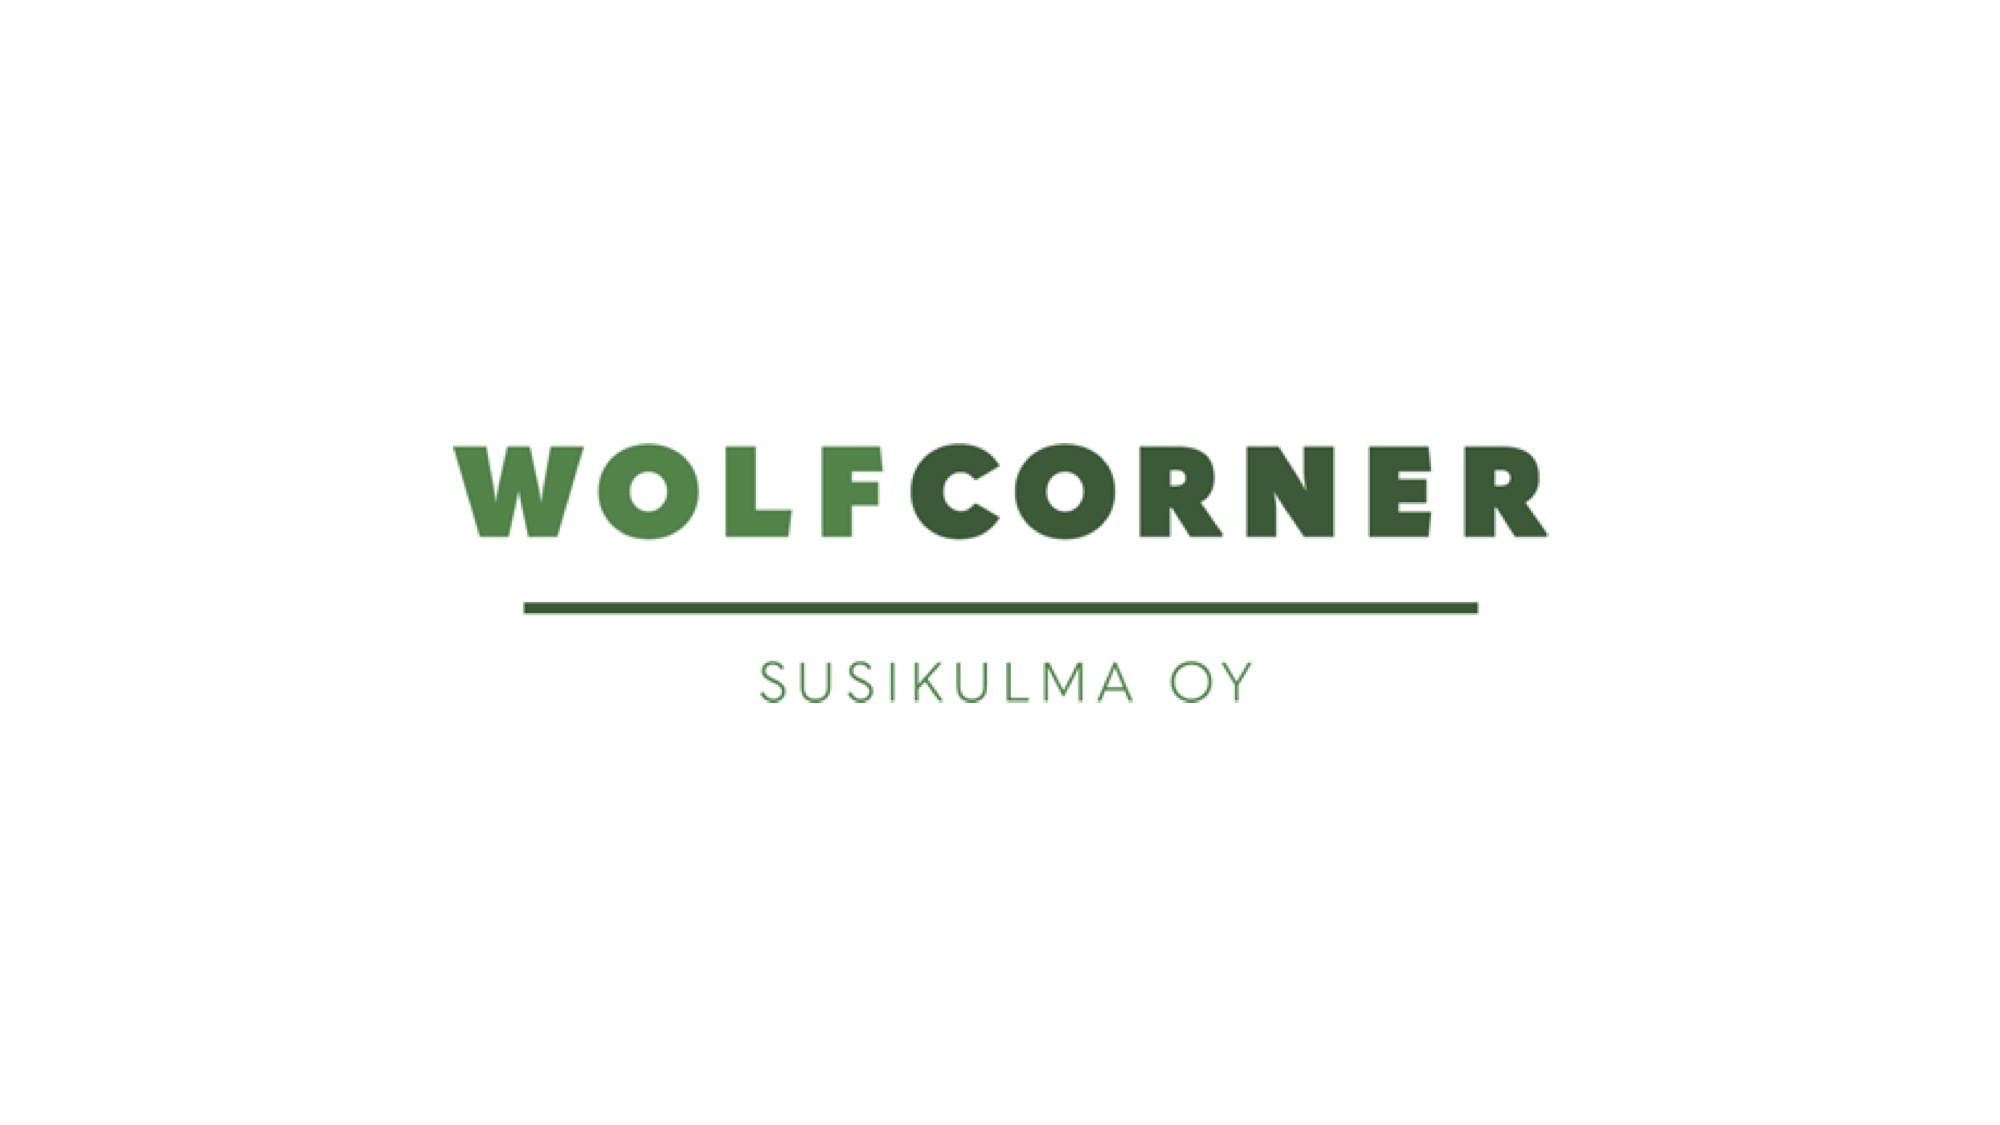 Wolfcorner Ltd